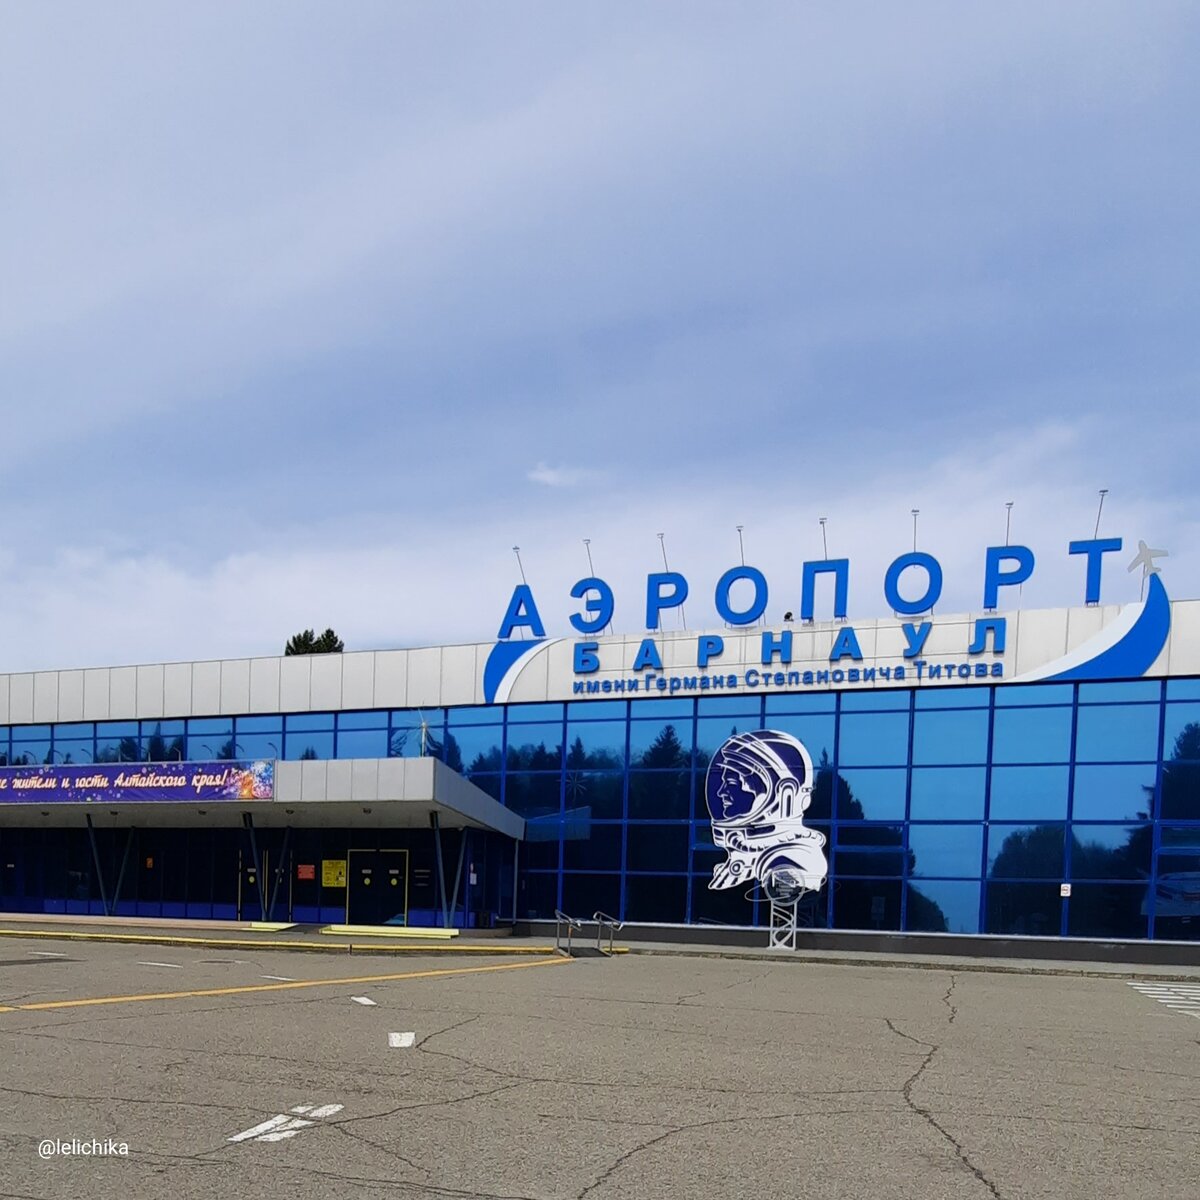 Аэропорт барнаул телефон. Аэропорт Барнаул. Аэропорт Барнаул 2022. Барнаульский аэропорт фото. Аэропорт в Барнауле название.